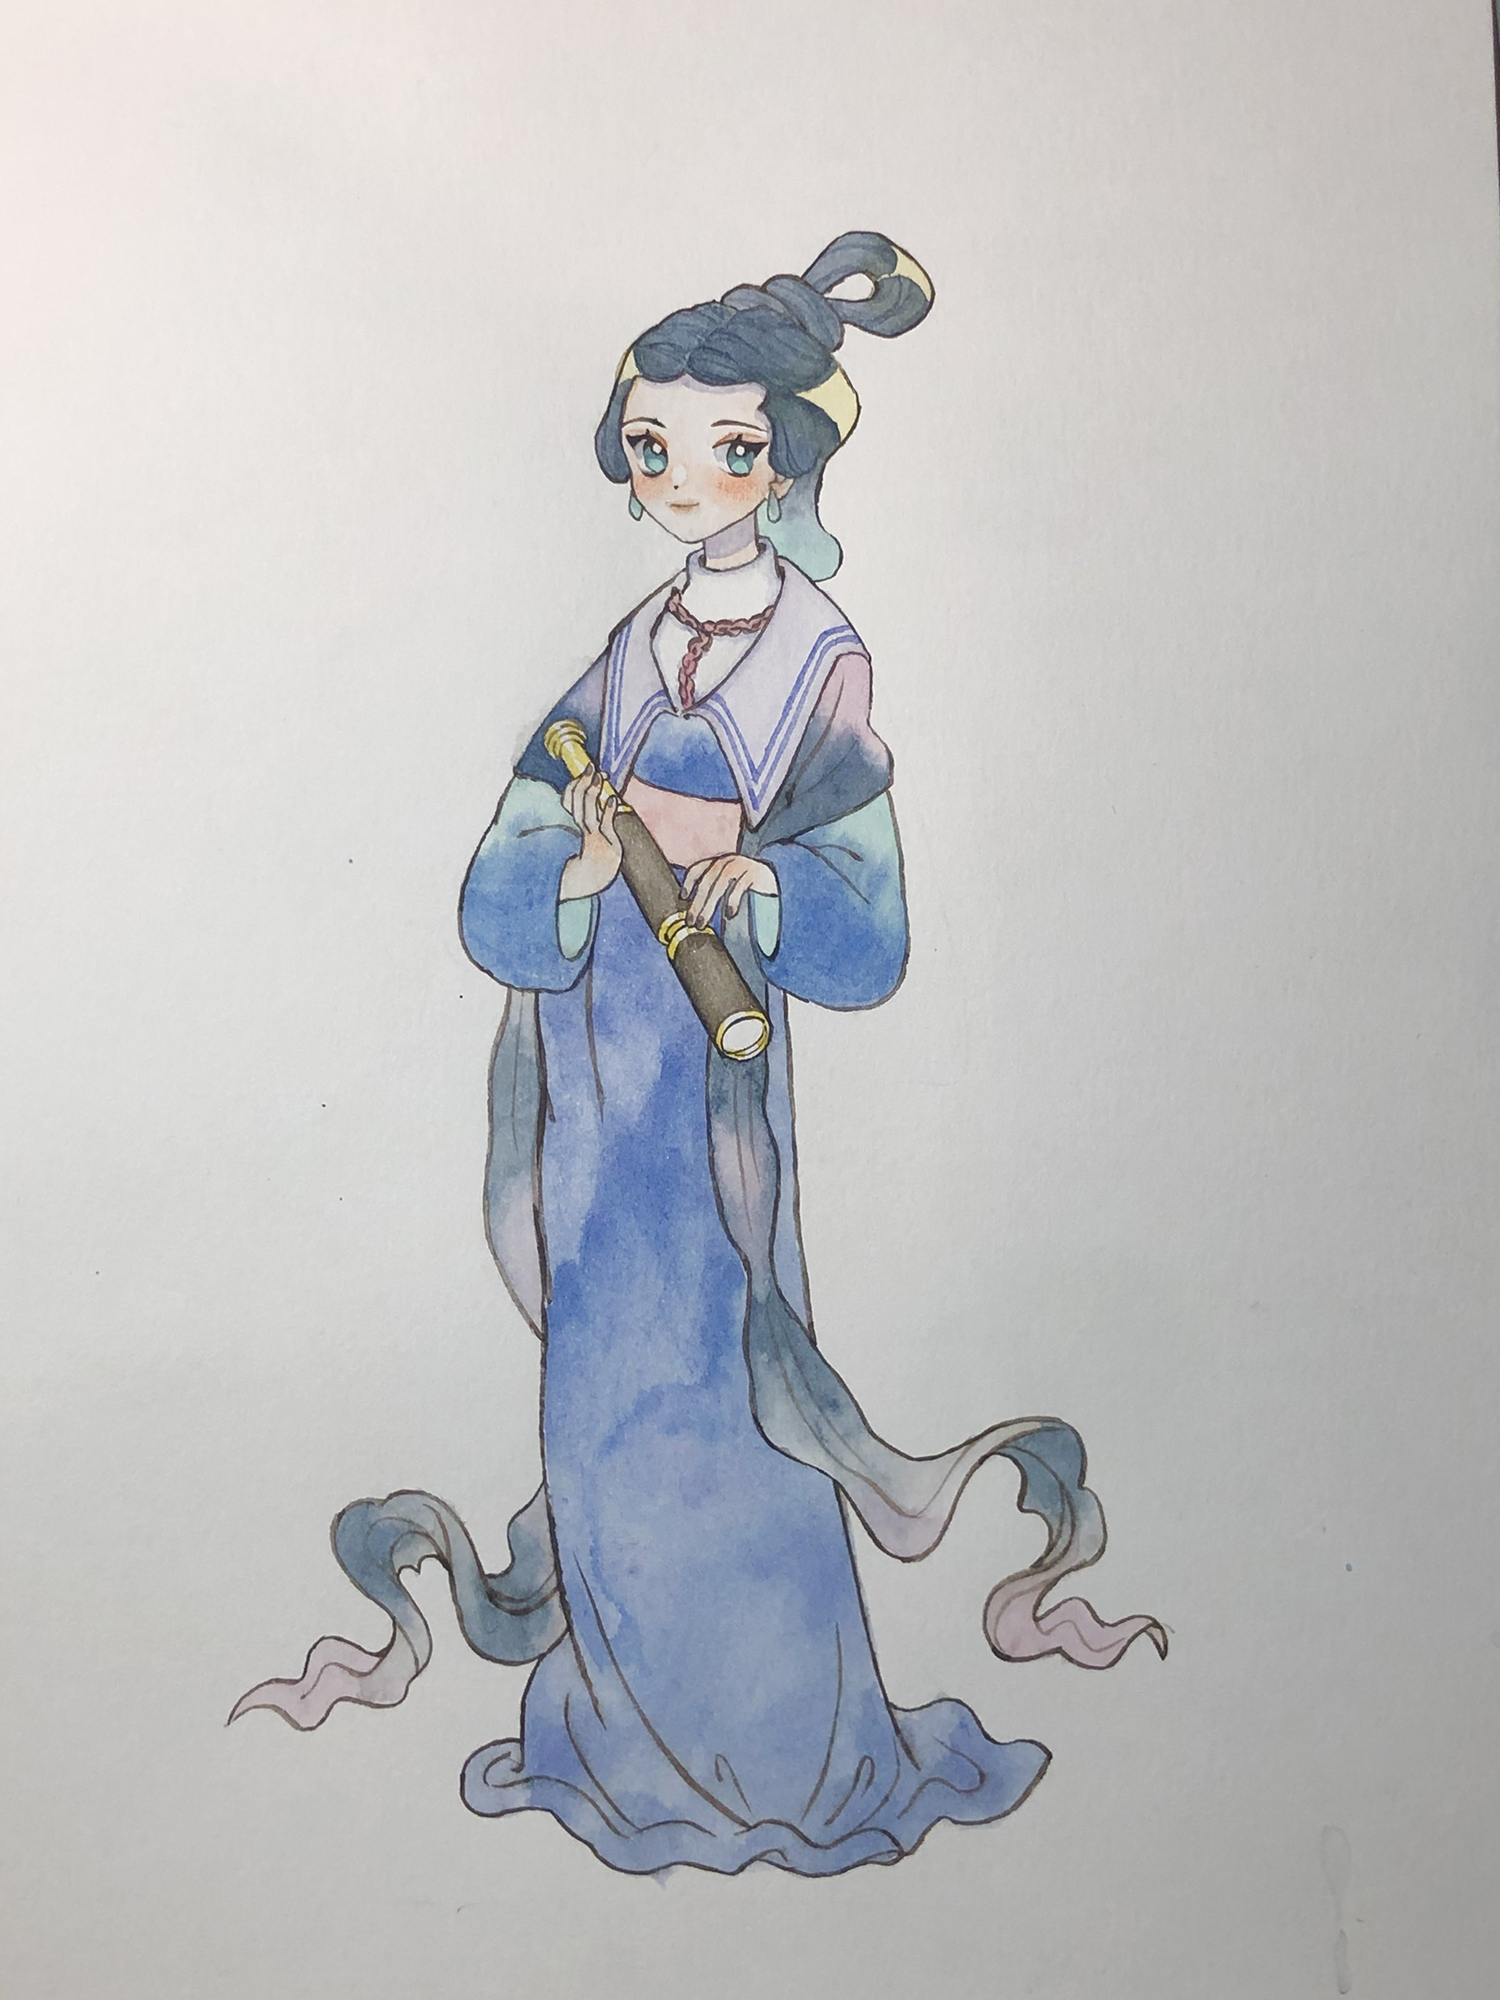 Japanese cartoon style illustration of a lady